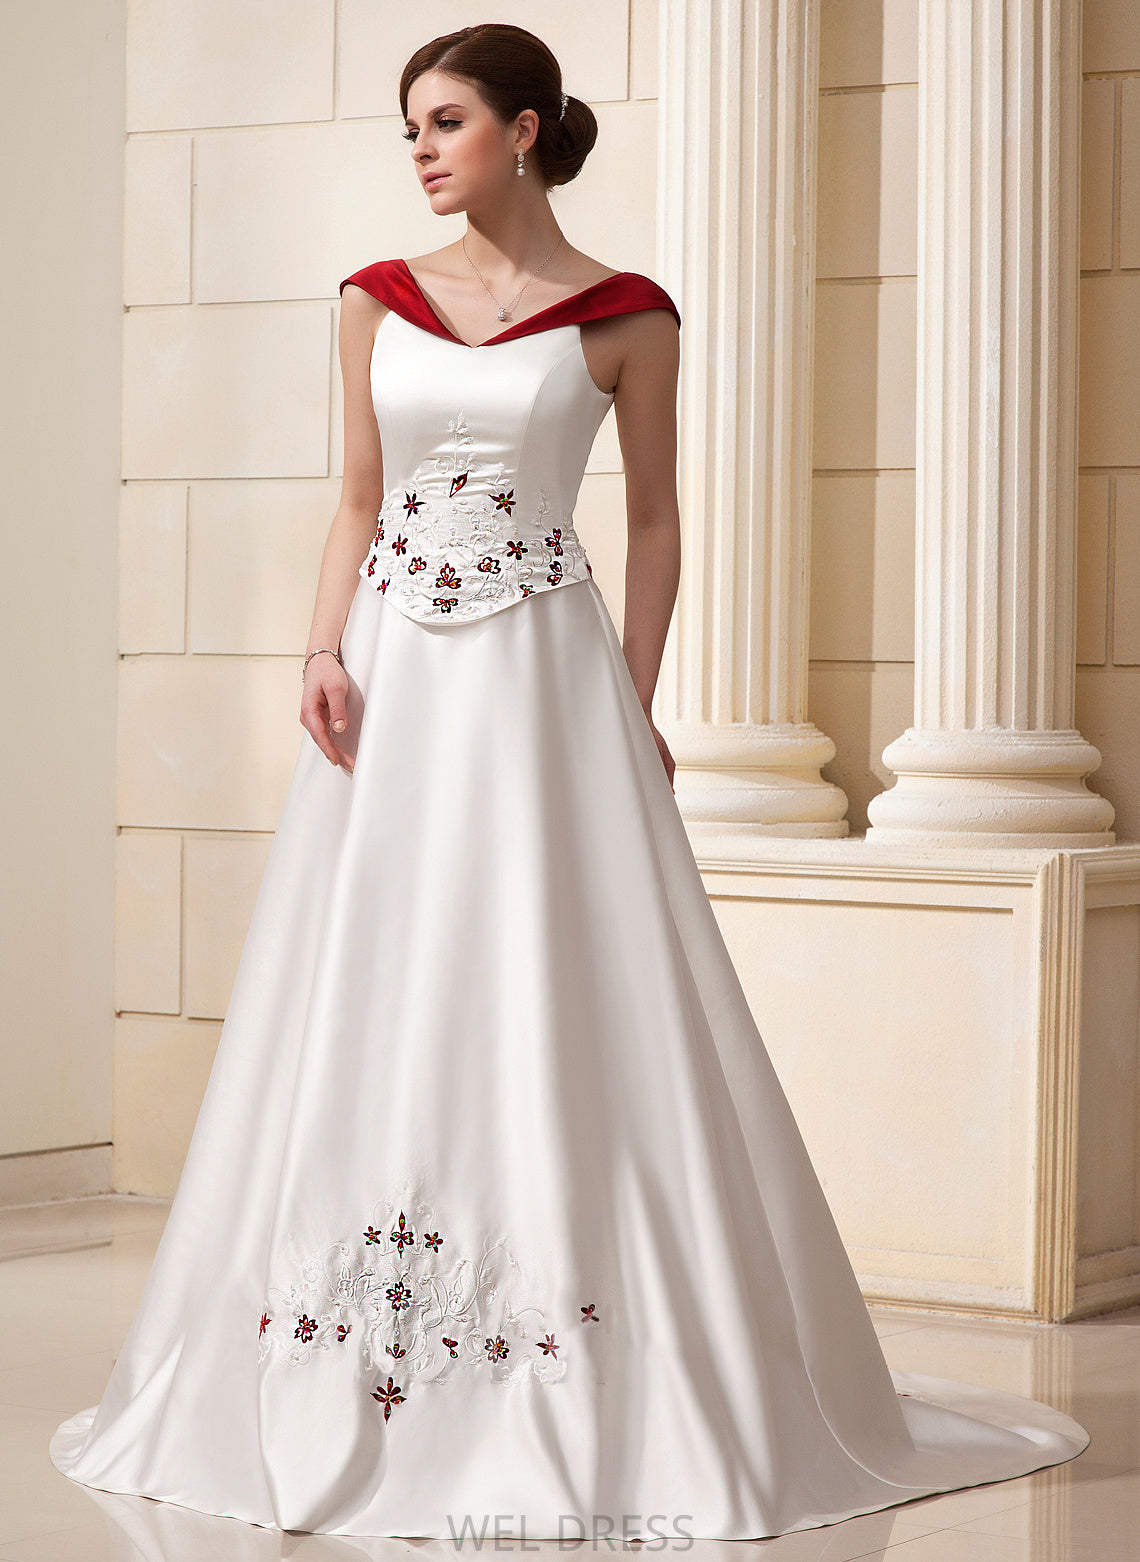 With Chapel Beading Train Satin Anna Dress Wedding Dresses Wedding Flower(s) Ball-Gown/Princess